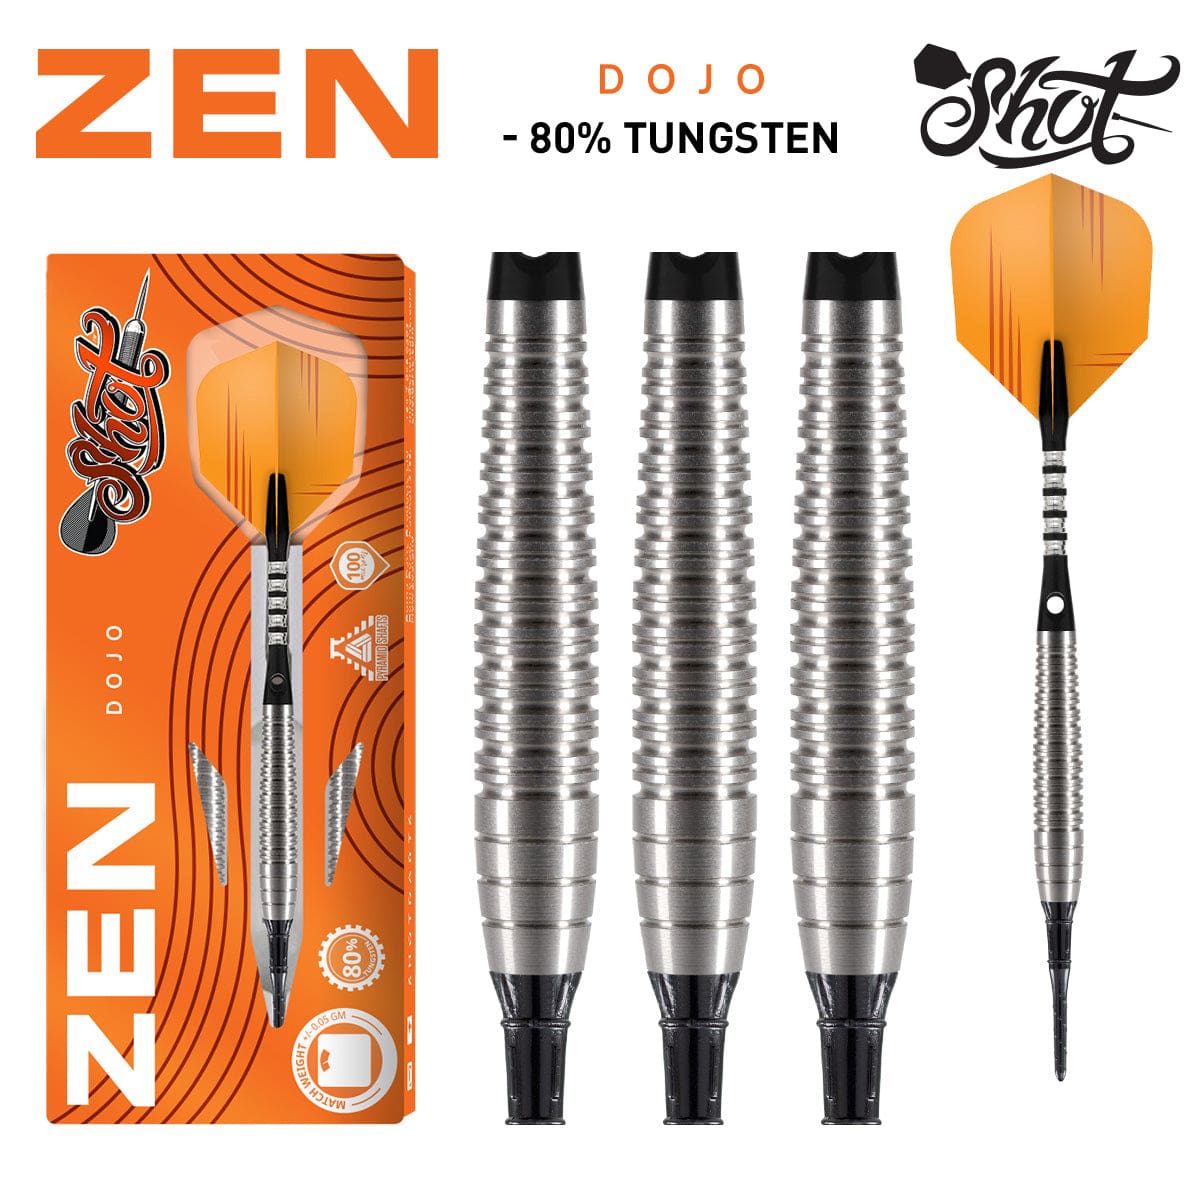 Zen Dojo Soft Tip Dart Set - 80% Tungsten Barrels